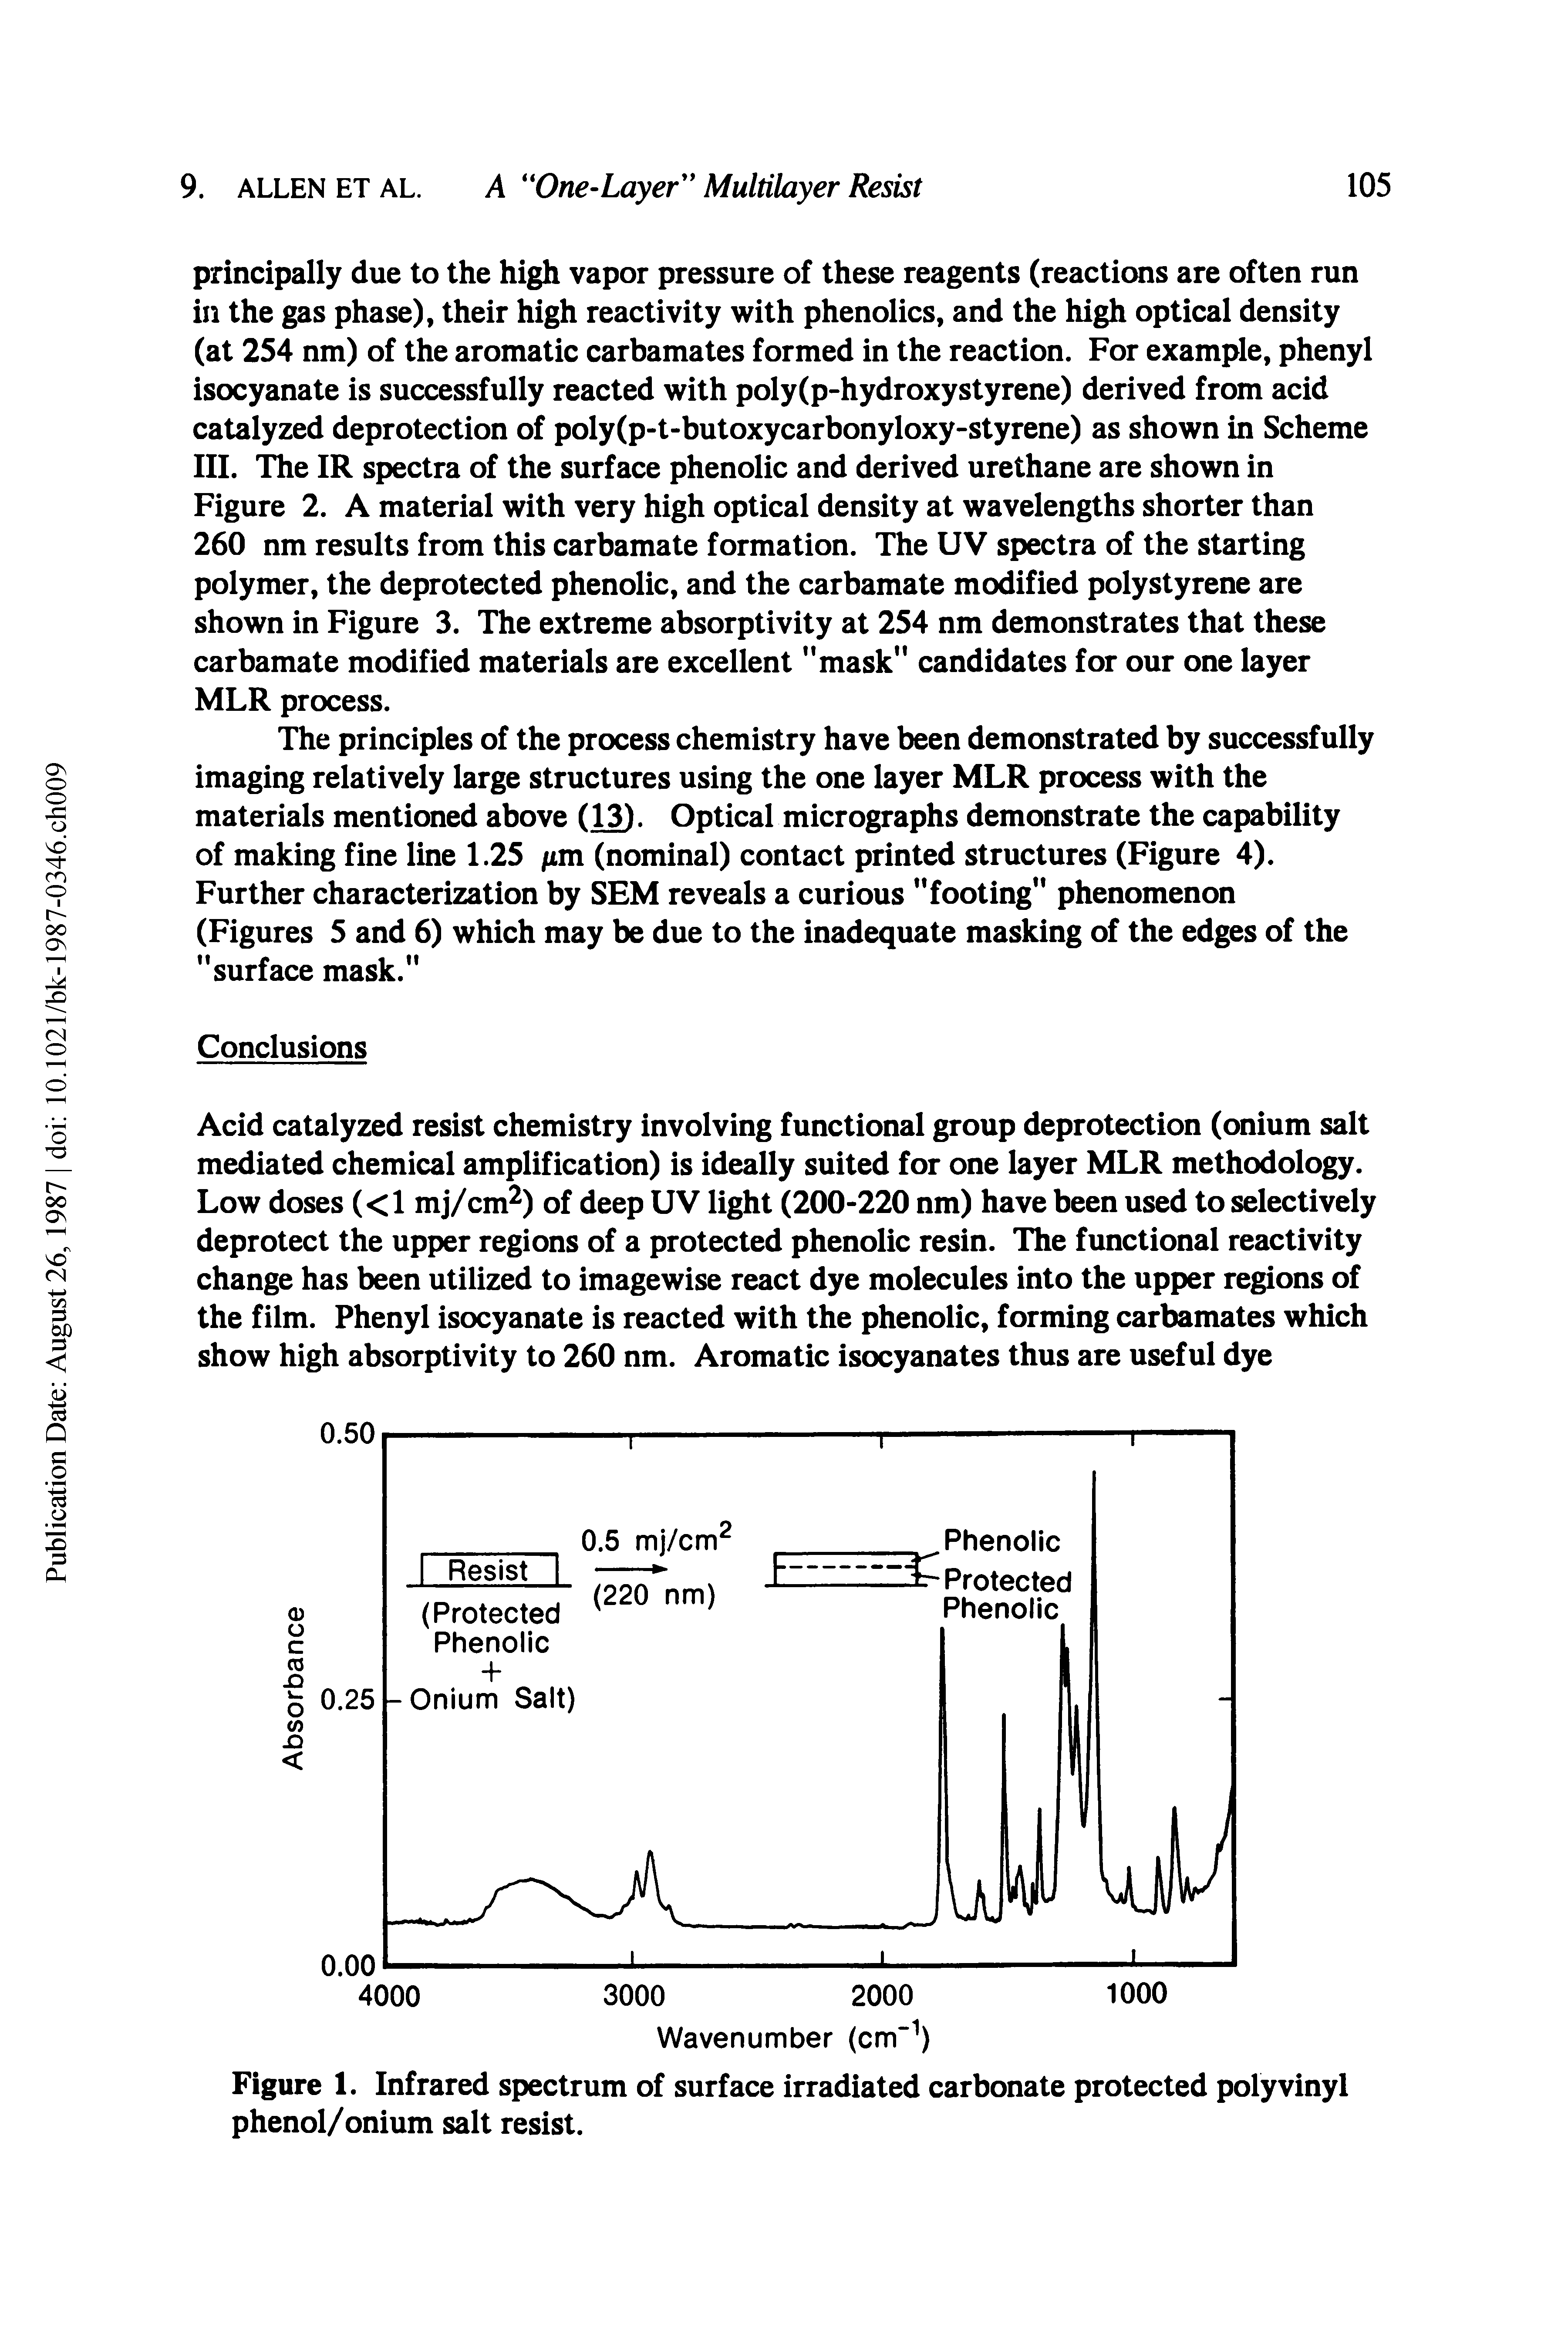 Figure 1. Infrared spectrum of surface irradiated carbonate protected polyvinyl phenol/onium salt resist.